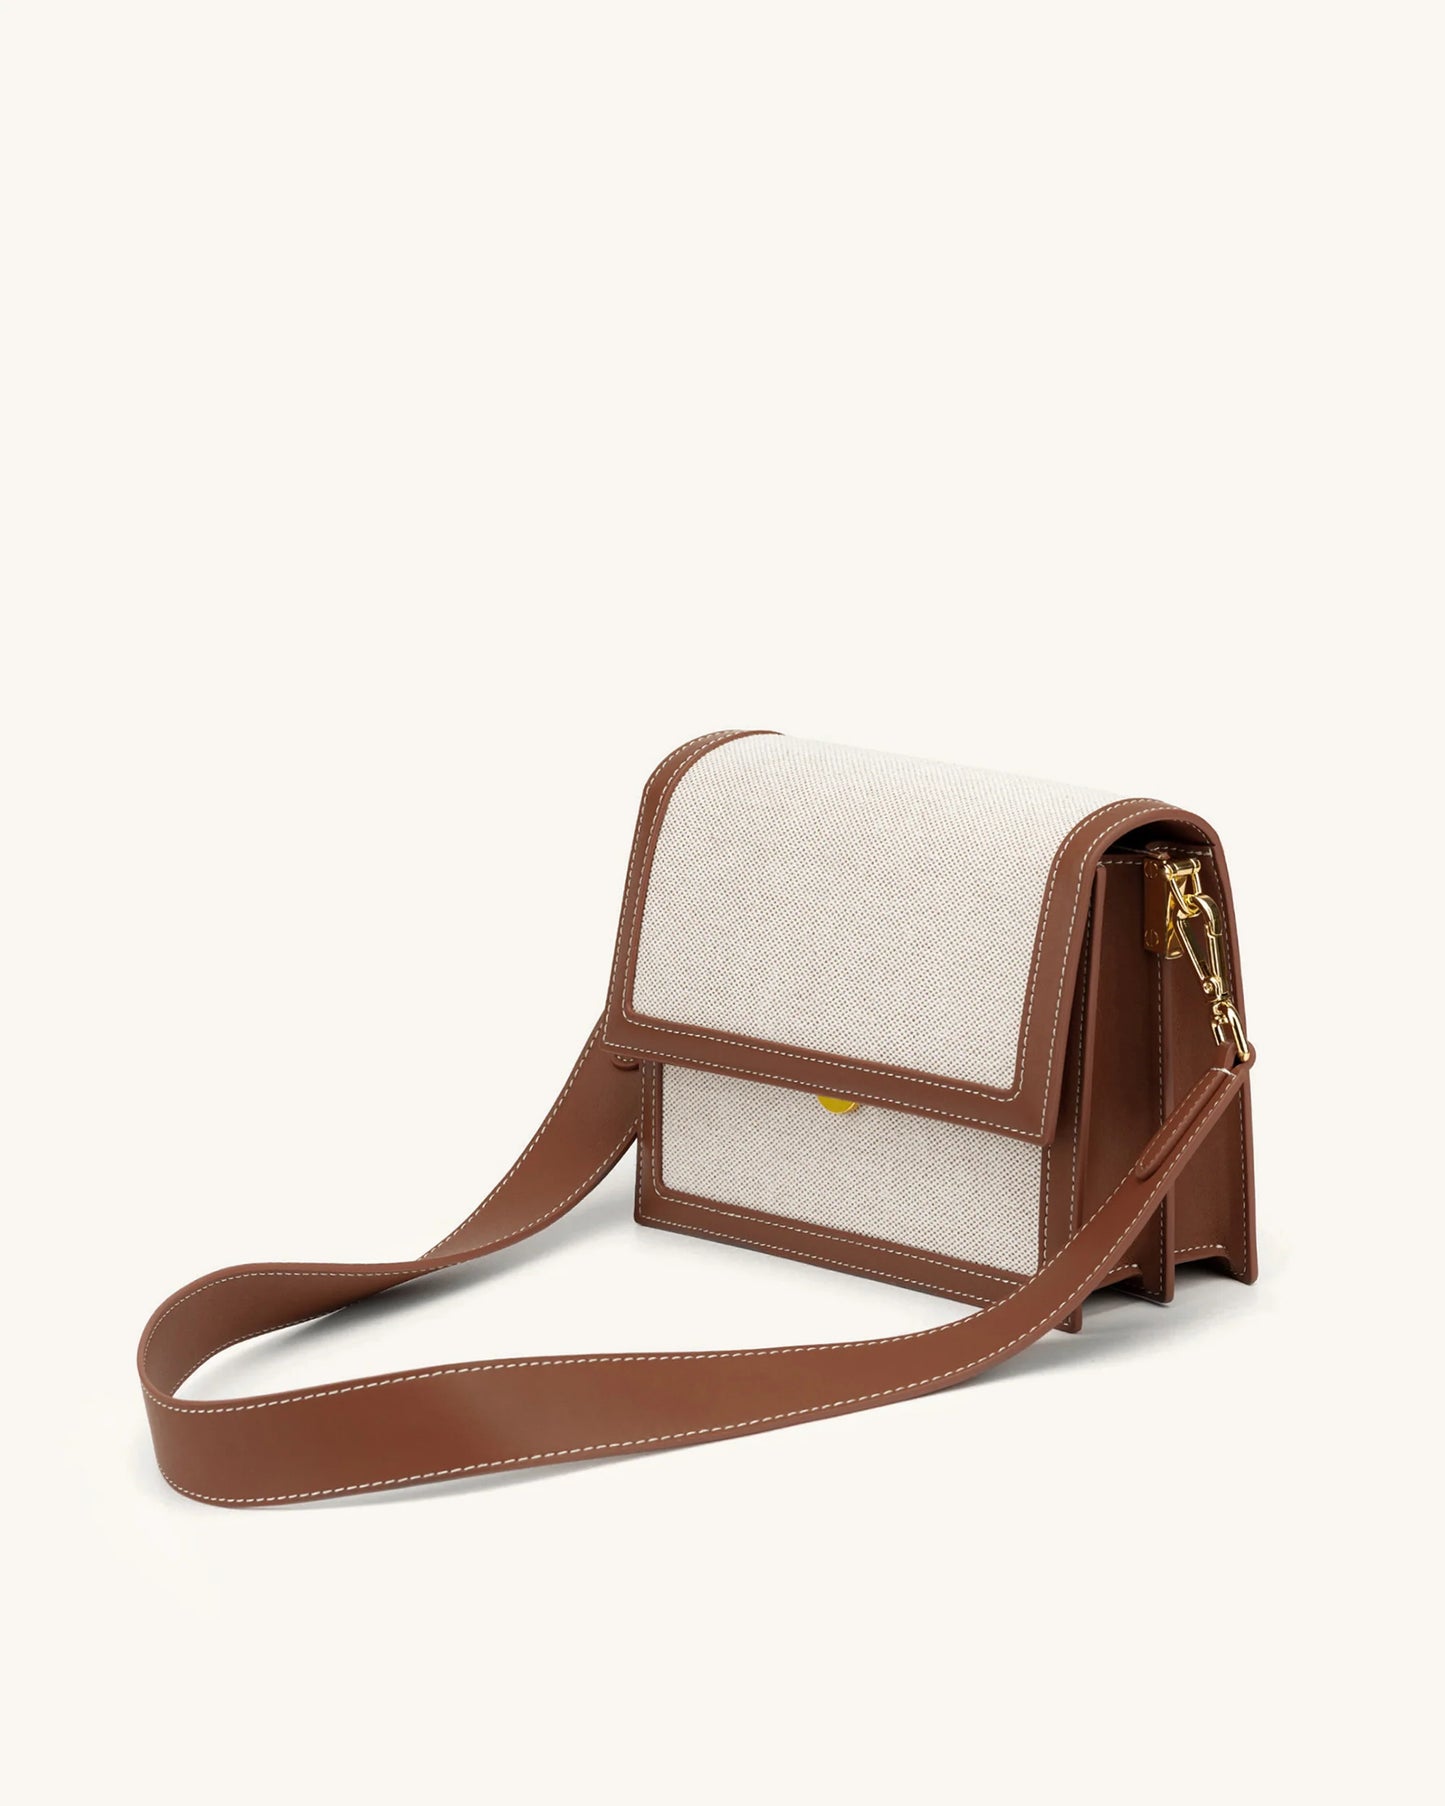 JW PEI Mini Flap Bag  Fashion, Style, Vegan leather